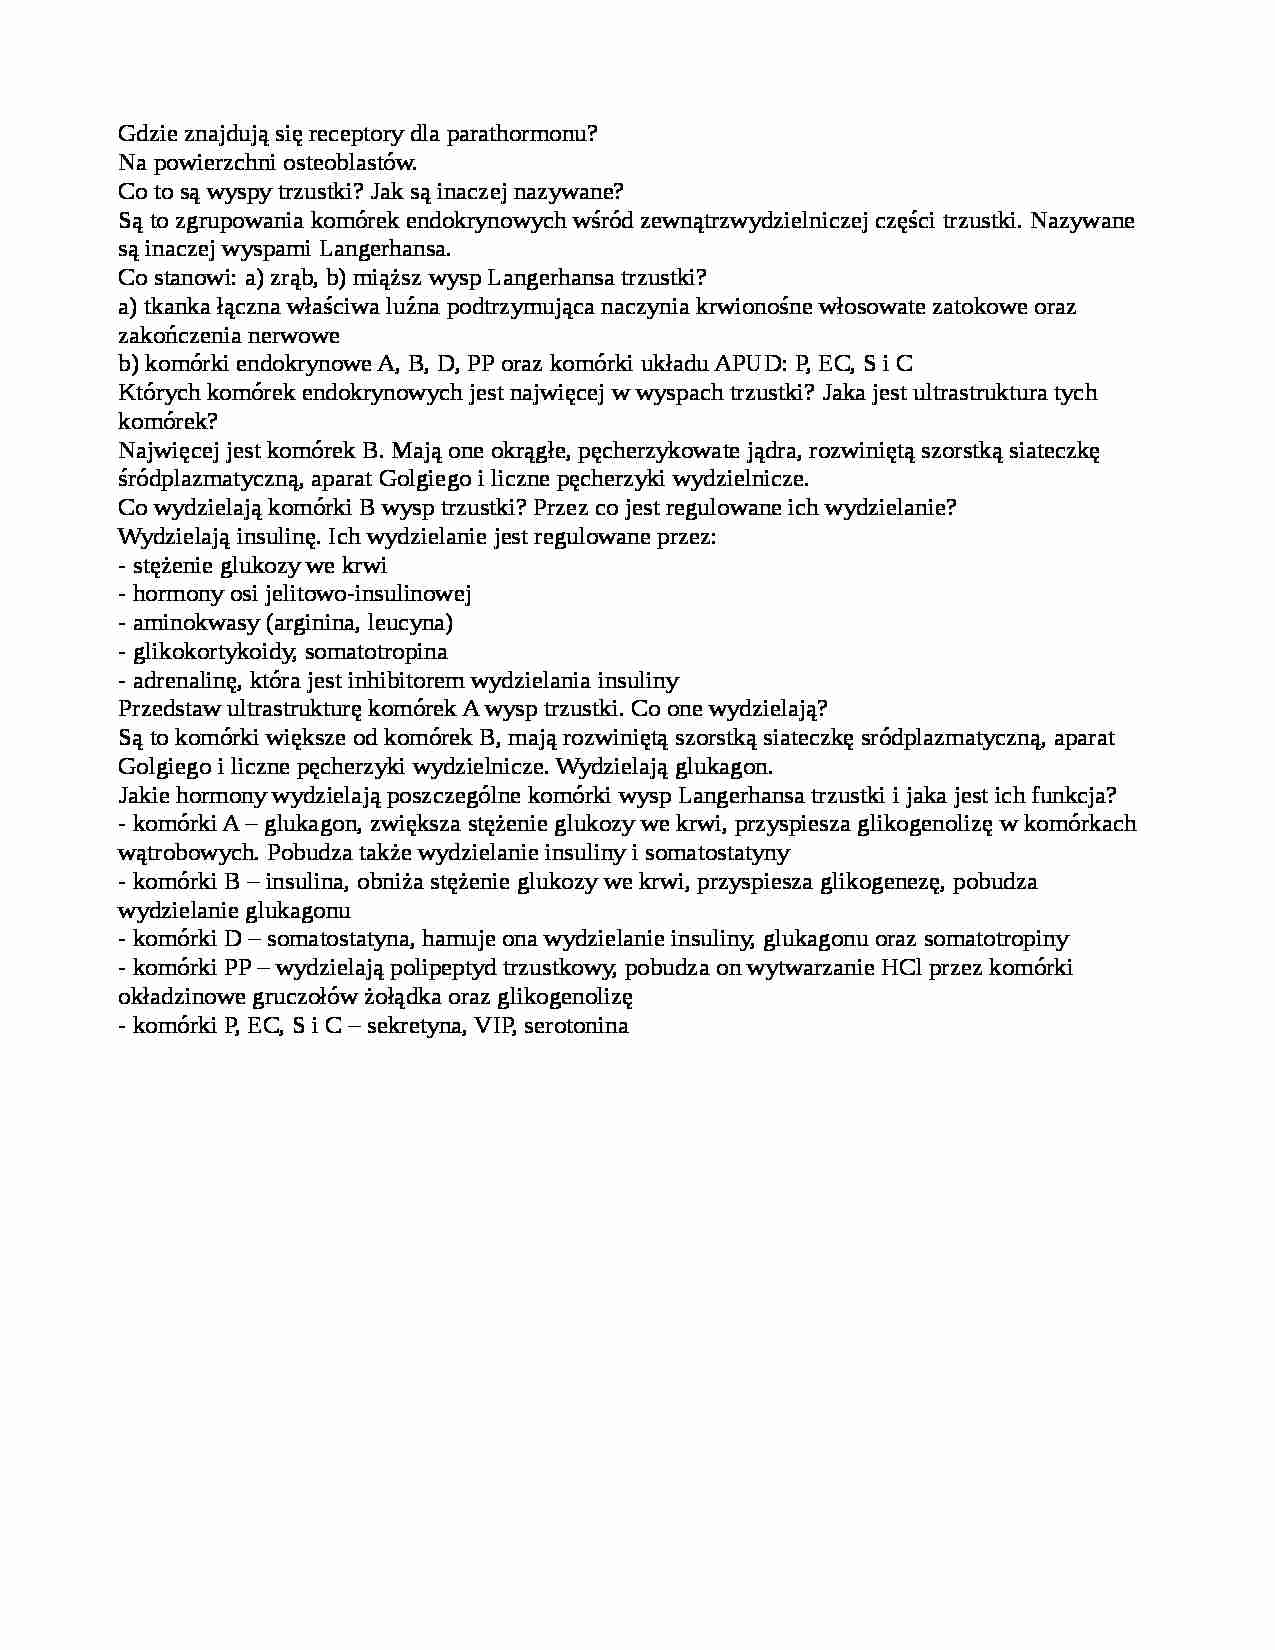 Receptory dla parathormonu - strona 1